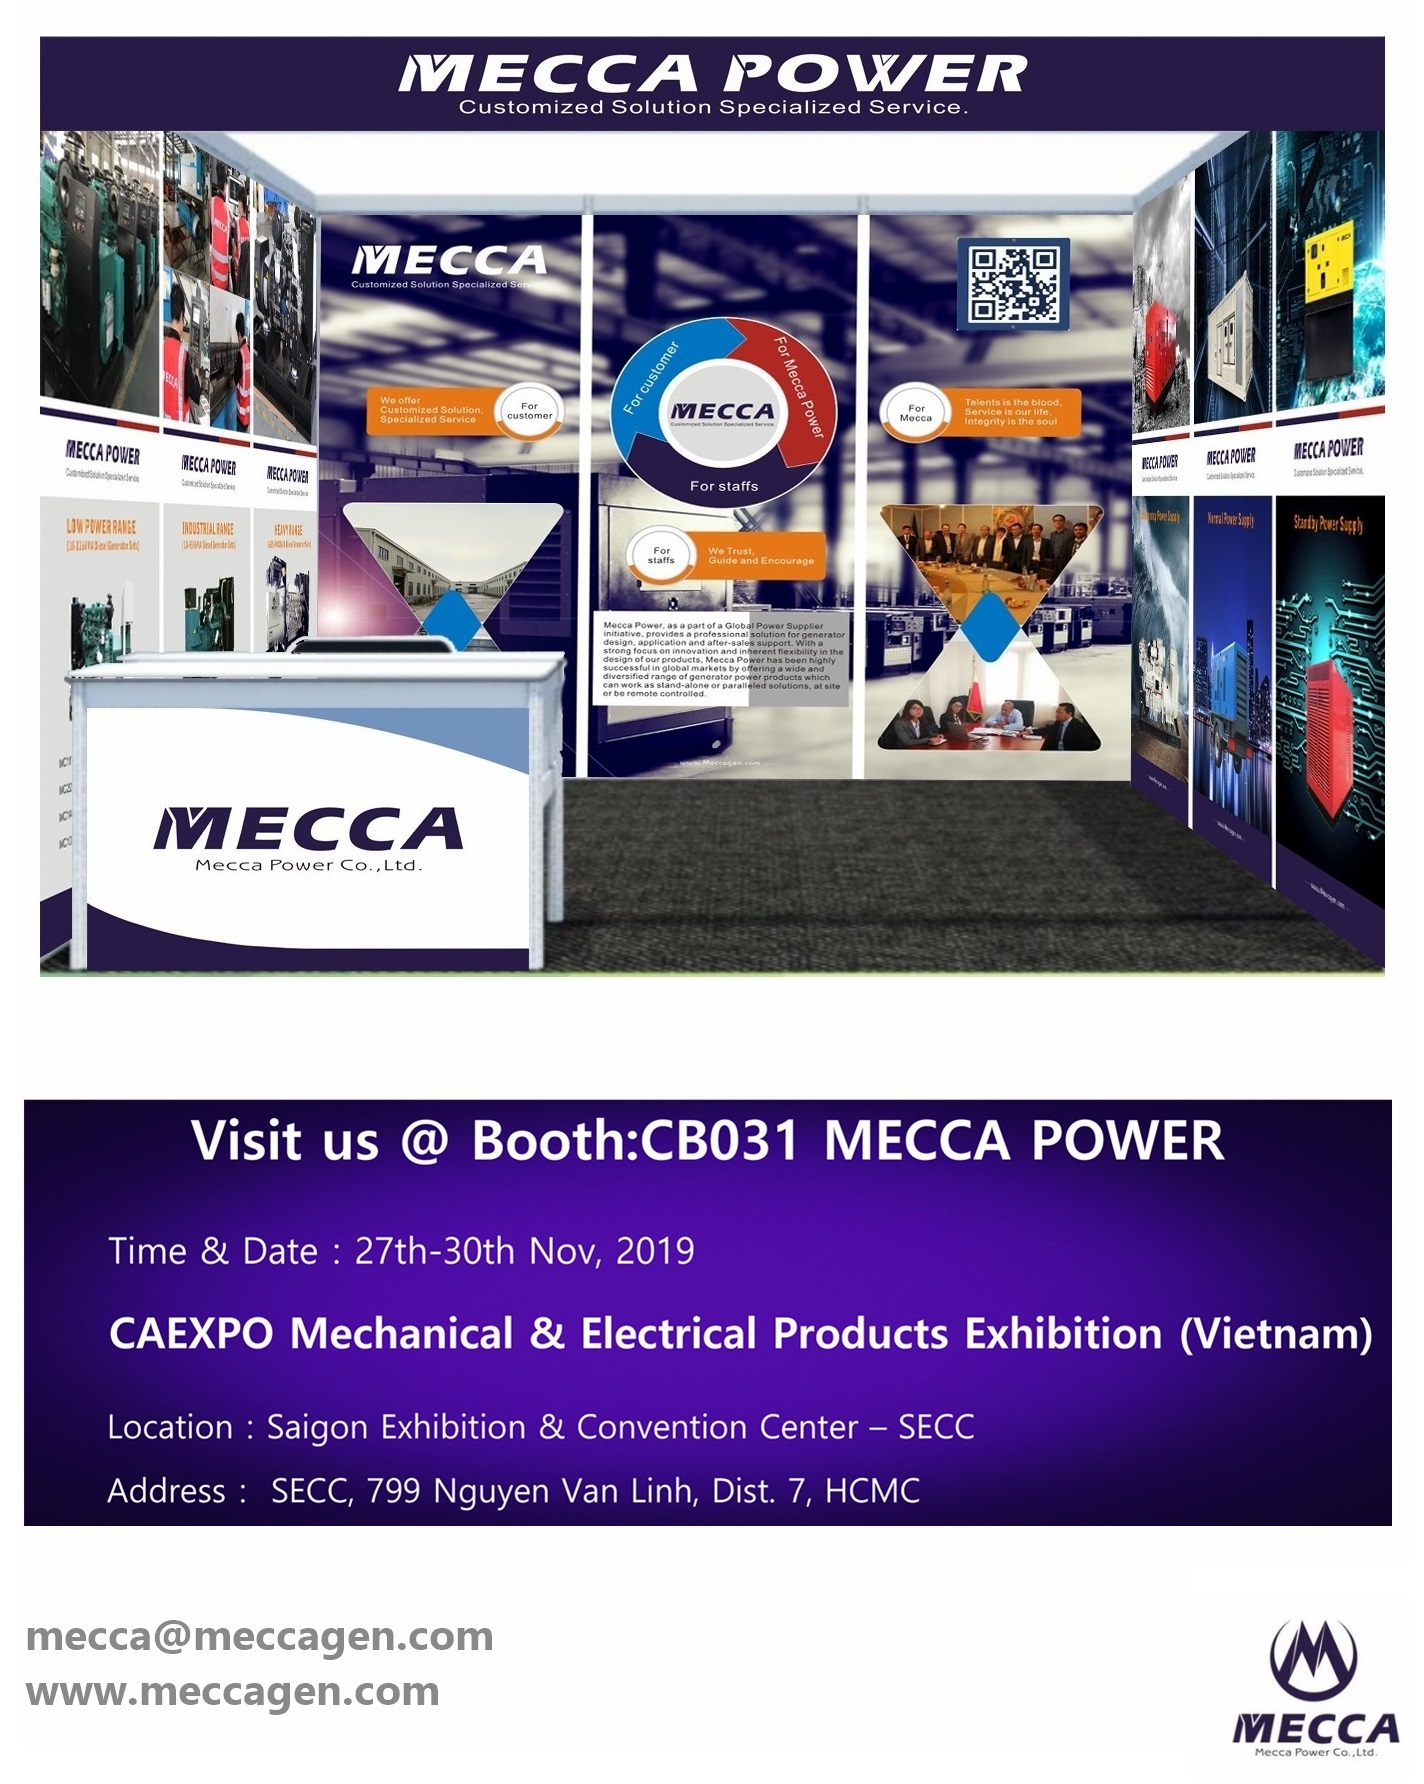 Mecca Power will attend CAEXPO-Vietnam Exhibition 27th-30th Nov,2019